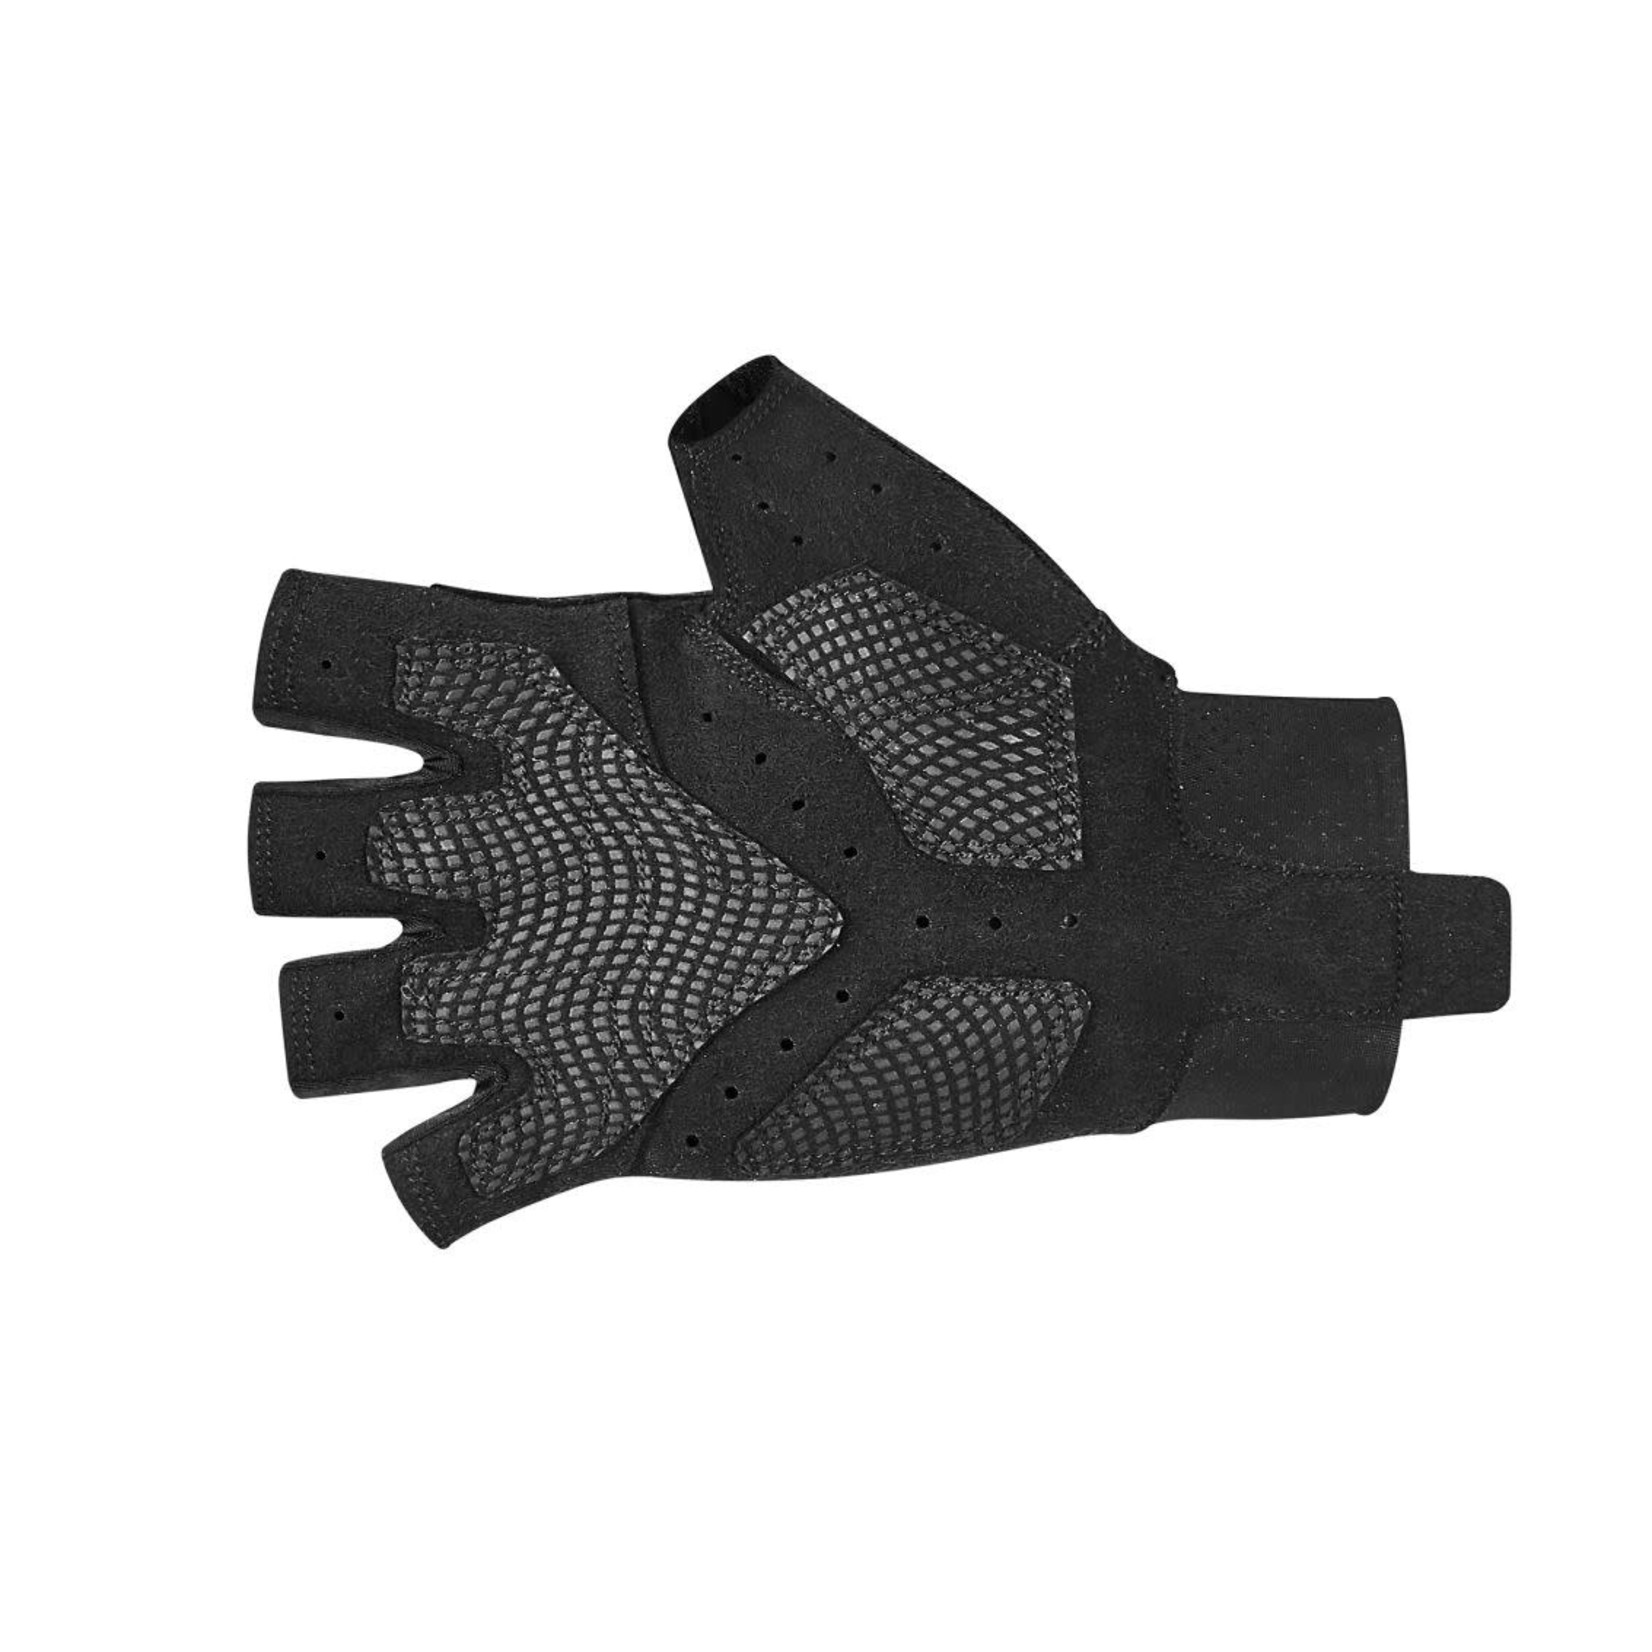 Giant Giant Elevate SF Gloves Black